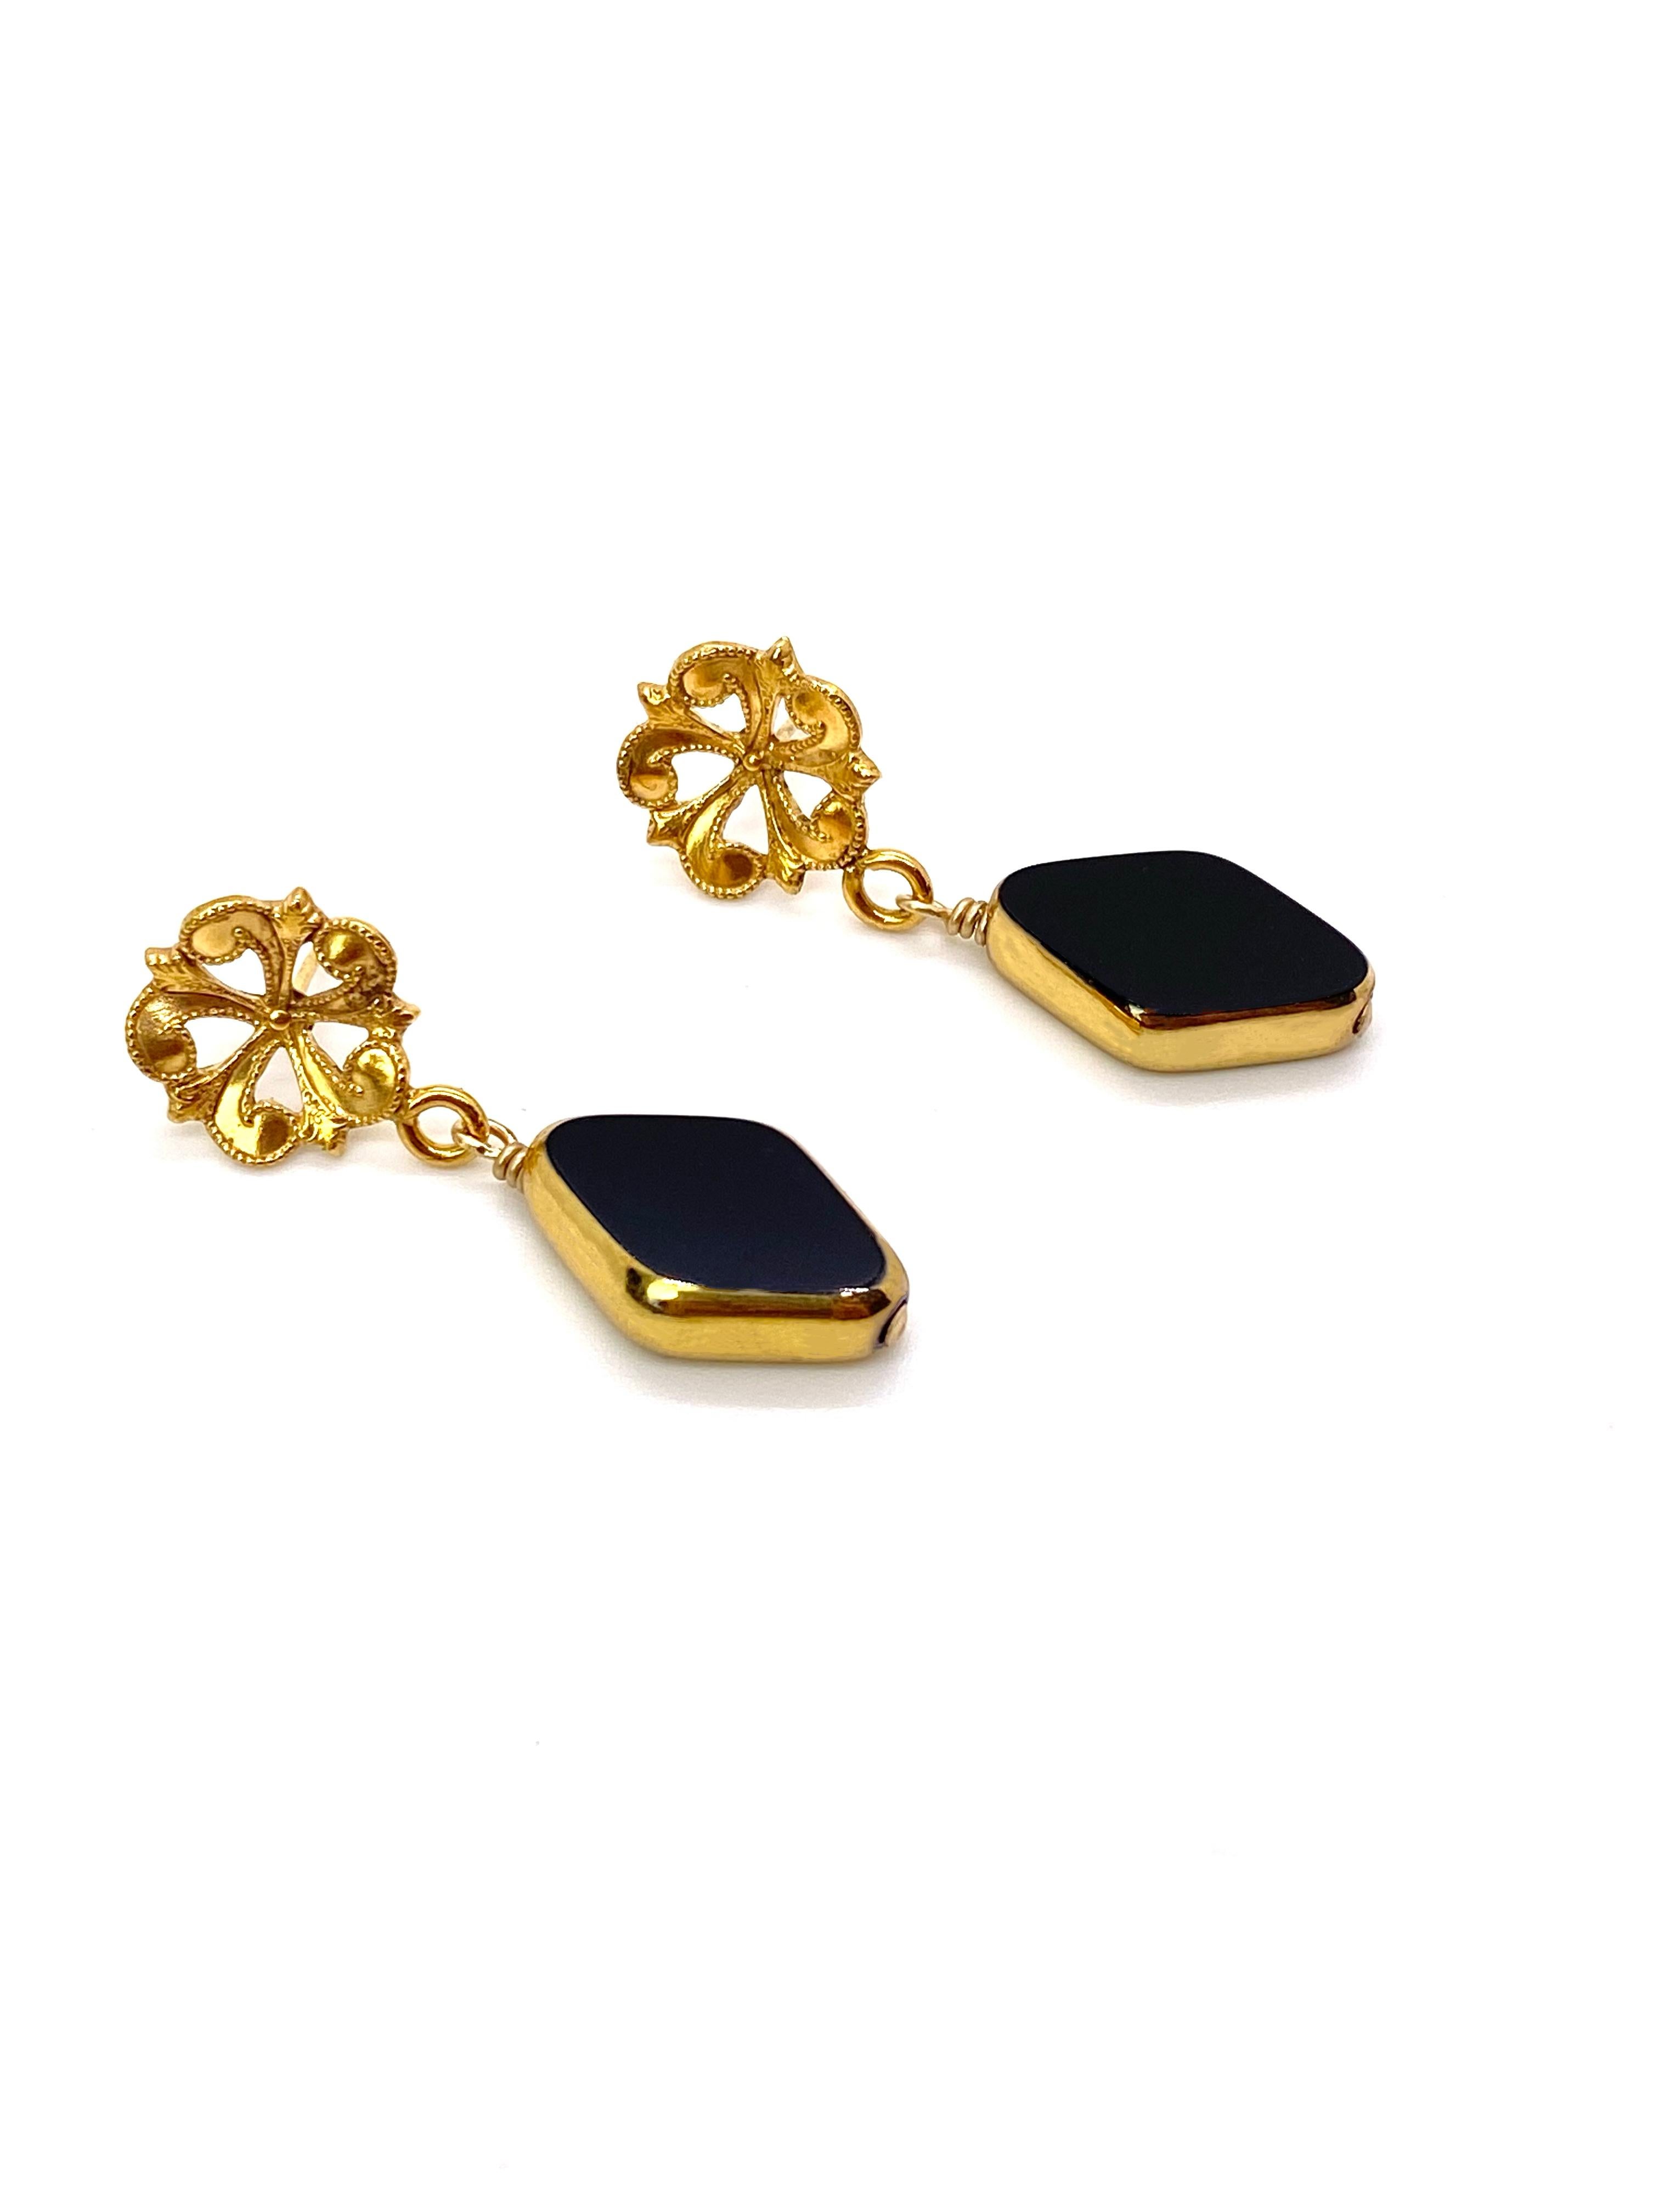 Fleur Art Deco German Earrings in Black 2 In New Condition For Sale In Monrovia, CA